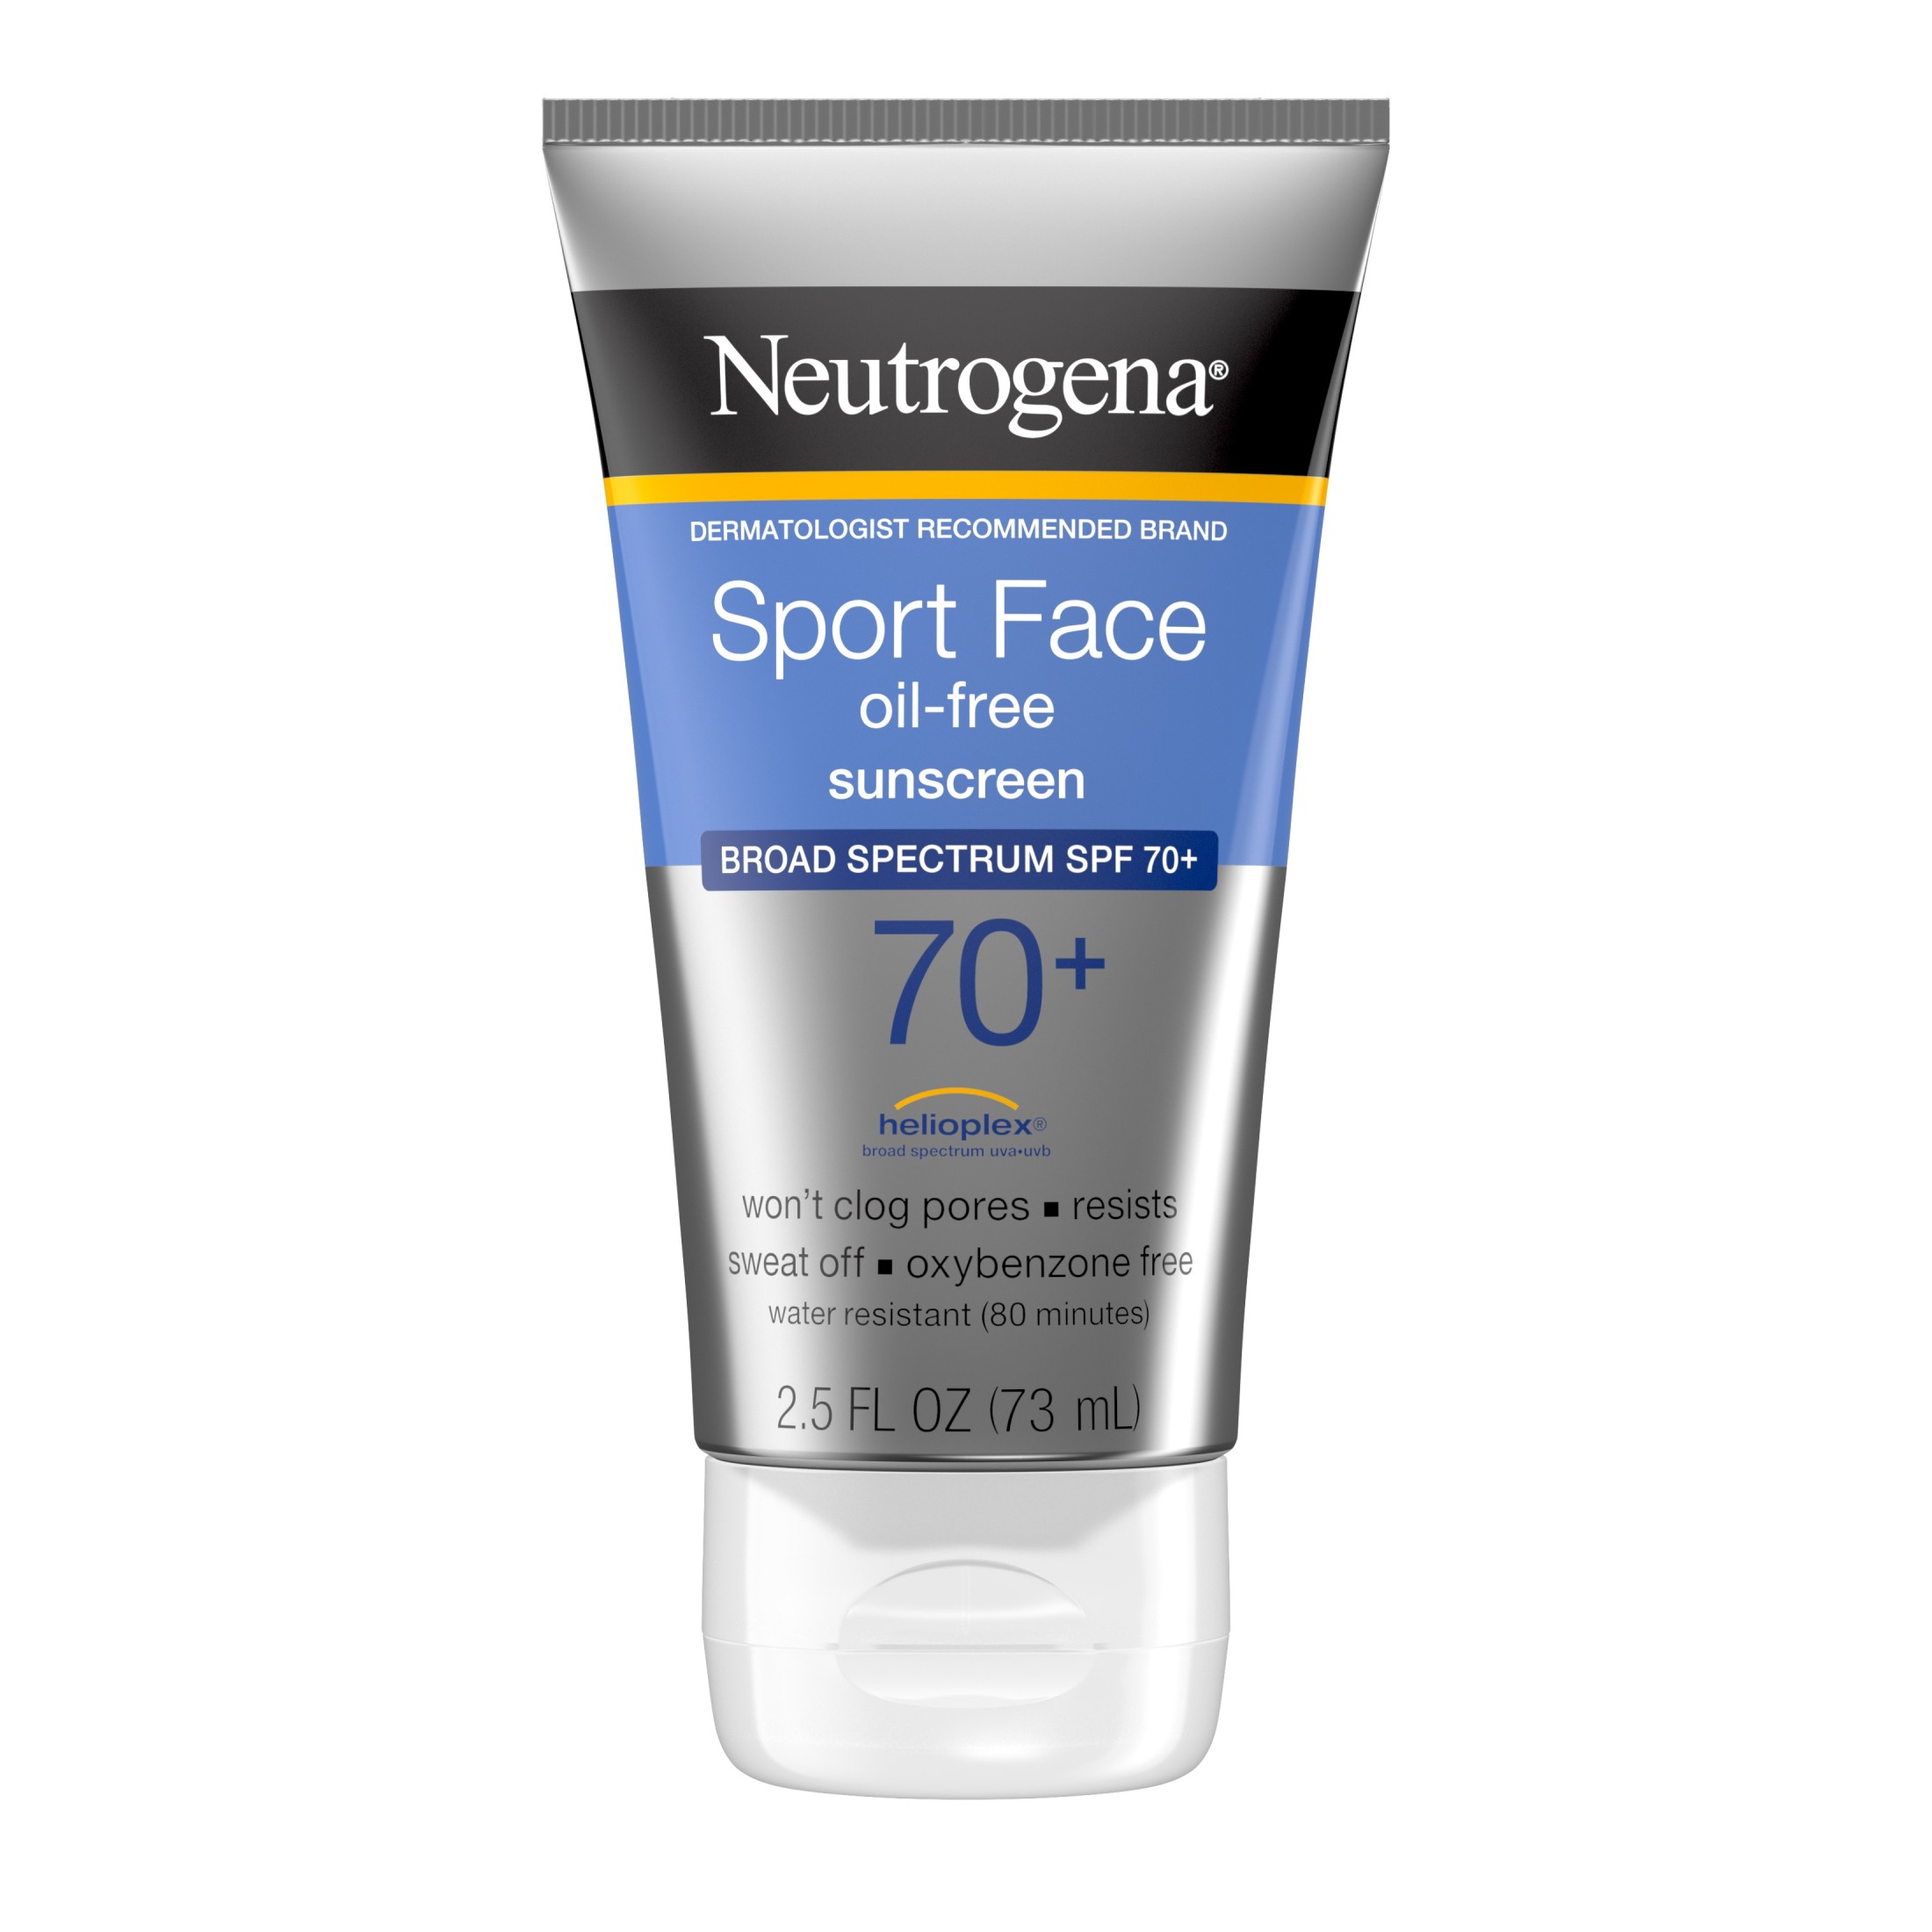 Neutrogena Sport Face Oil-Free Lotion Sunscreen, SPF 70+ Sunblock, 2.5 fl oz - image 1 of 9